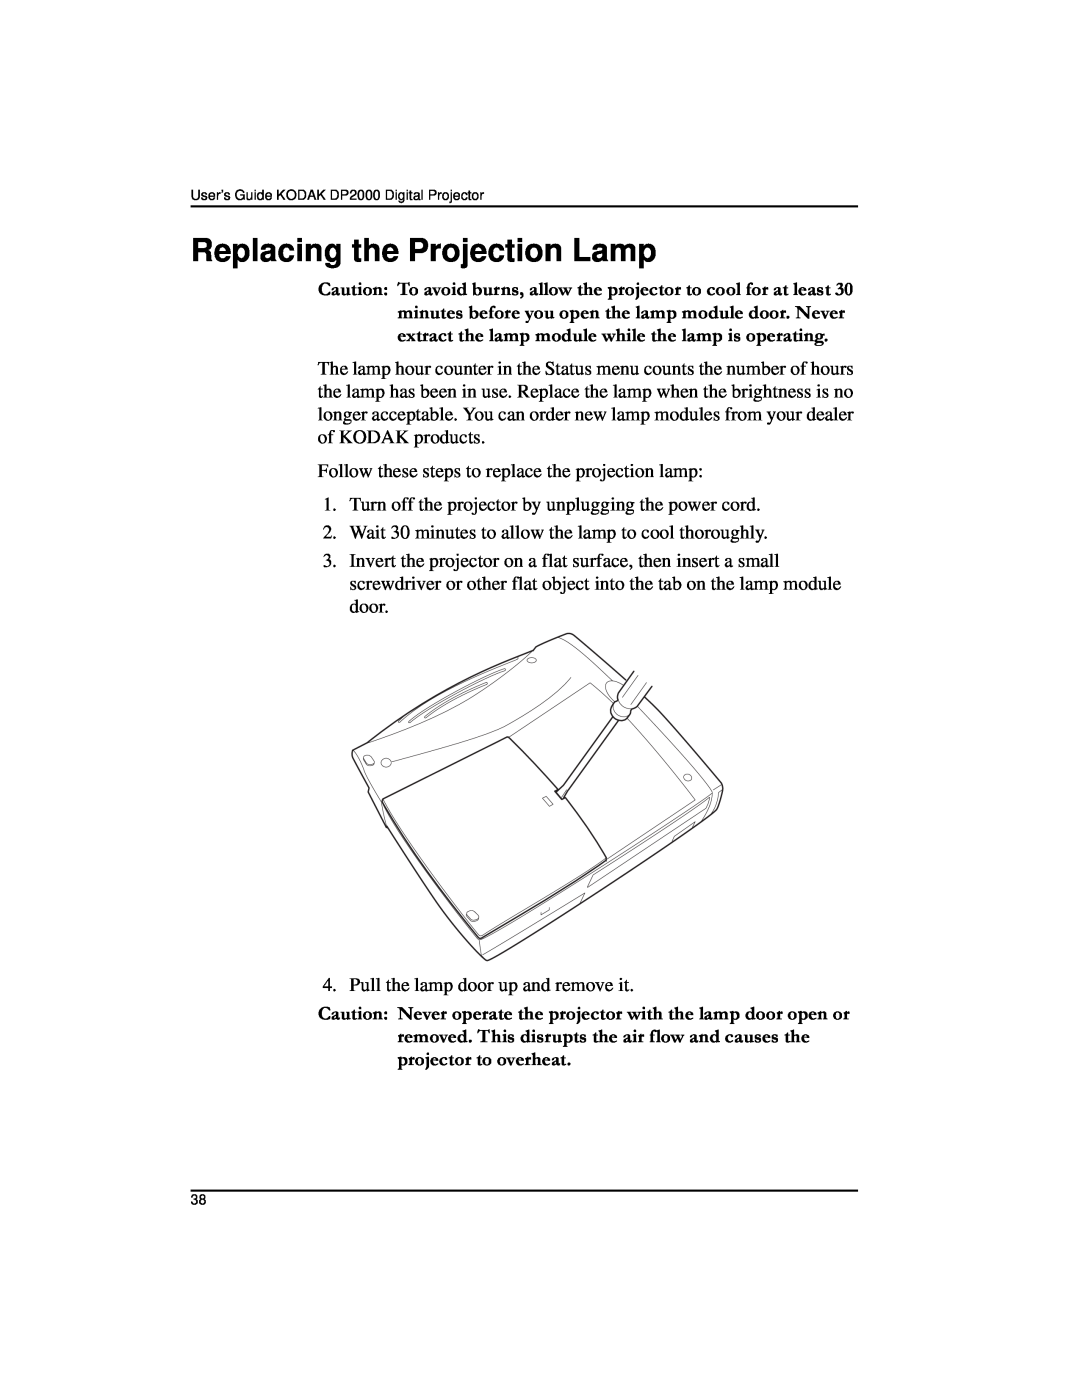 Kodak DP2000 manual Replacing the Projection Lamp, Surmhfwruwrryhukhdw 